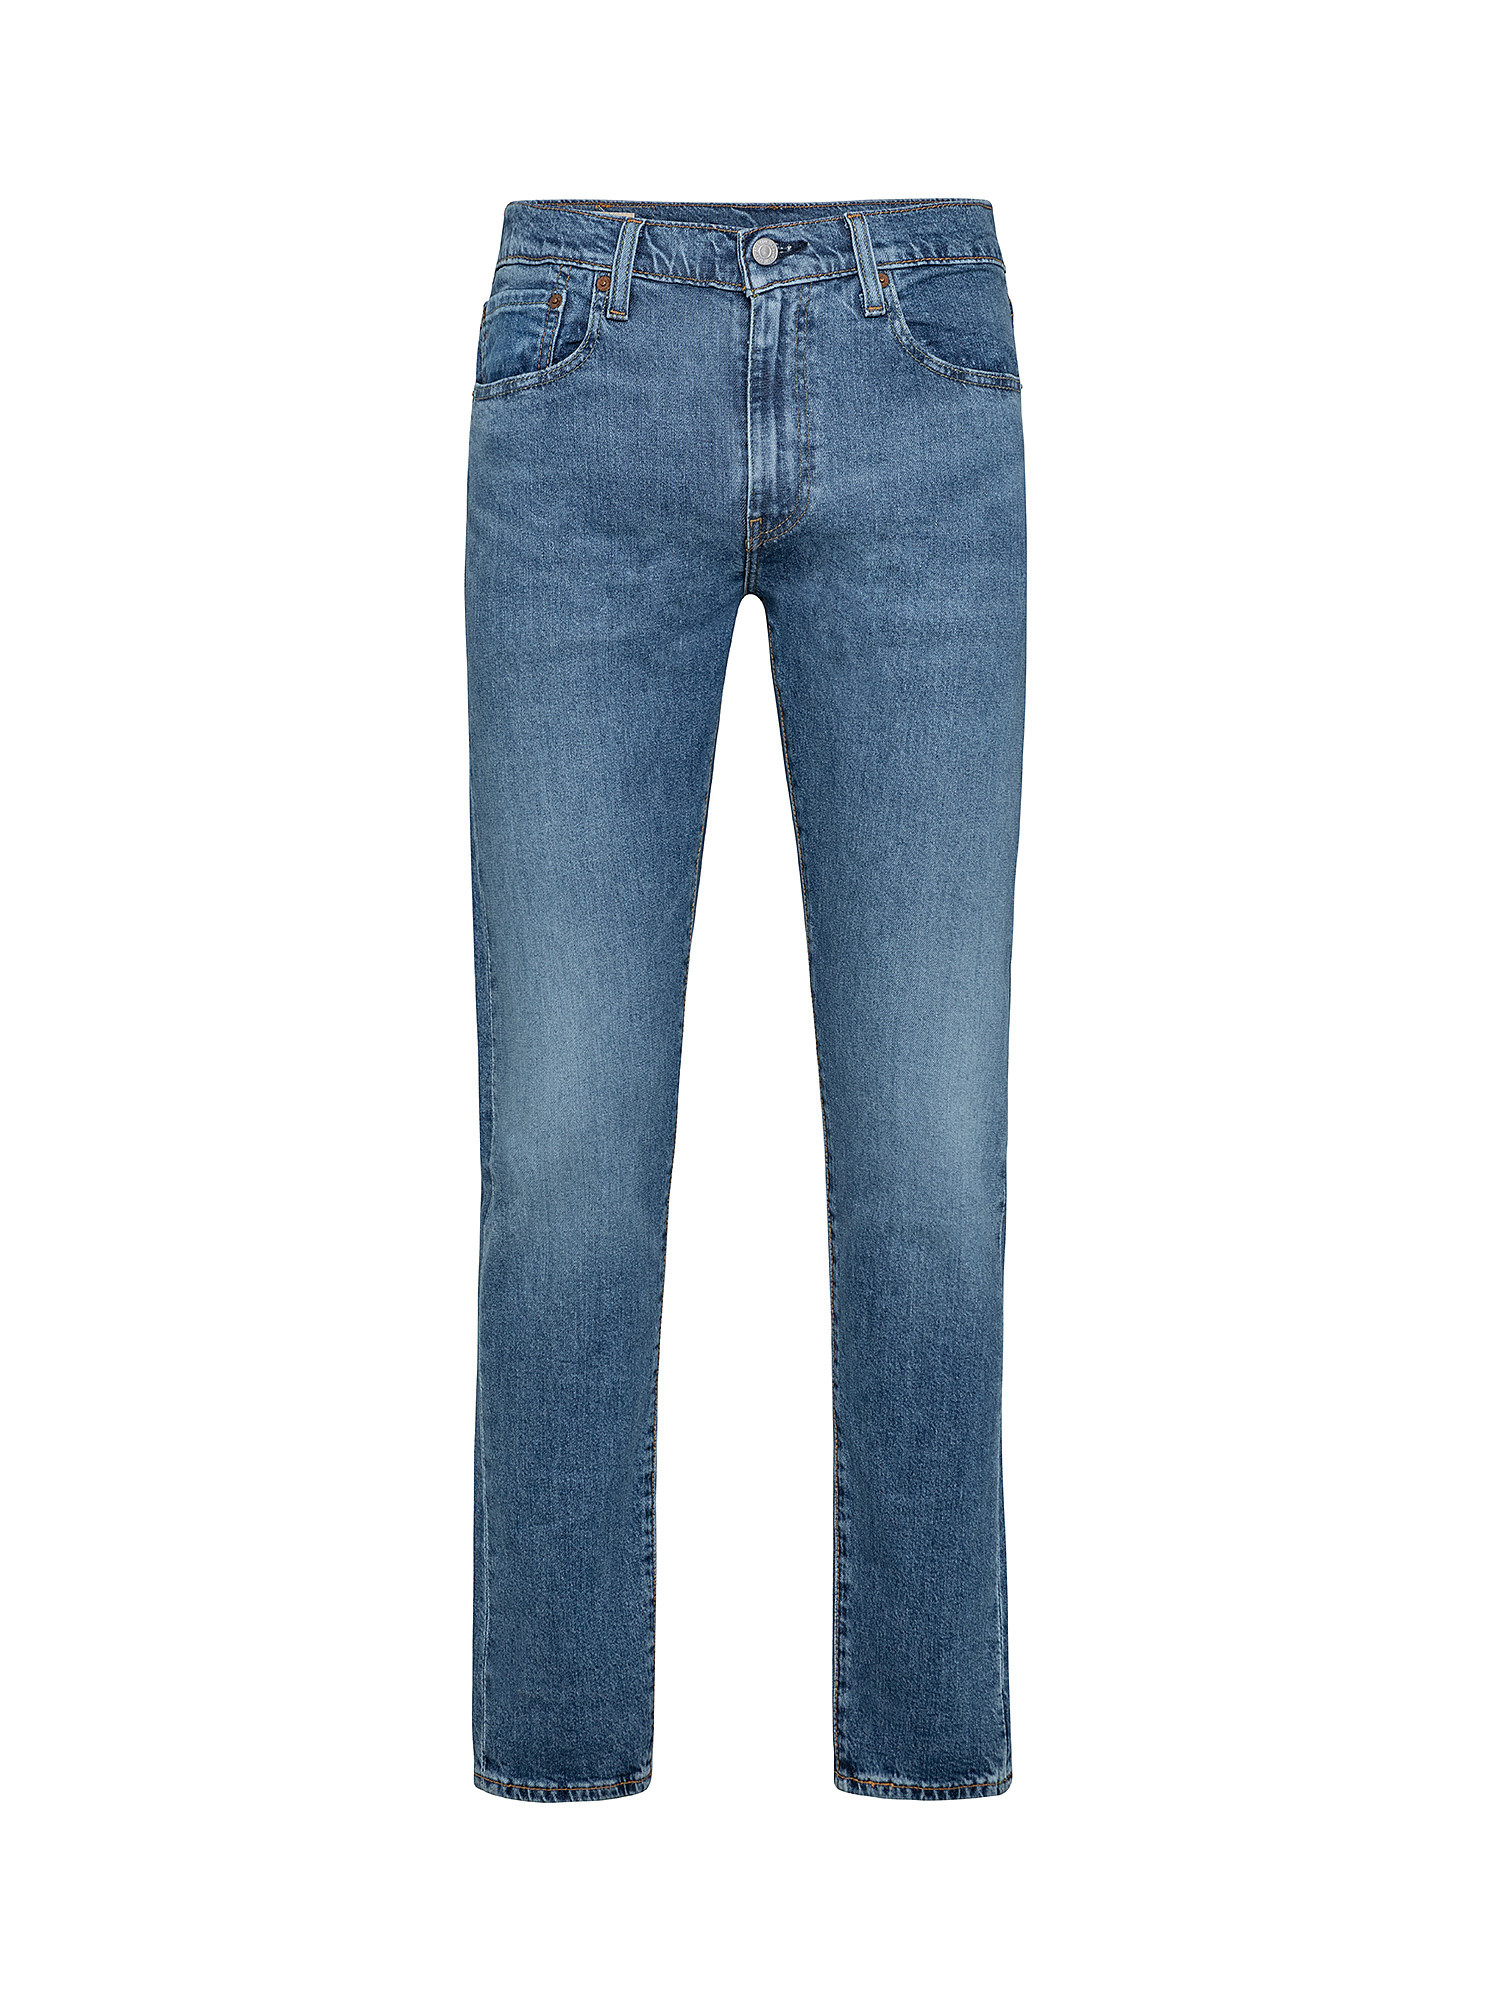 551Z Straight crop jeans, Blue, large image number 0